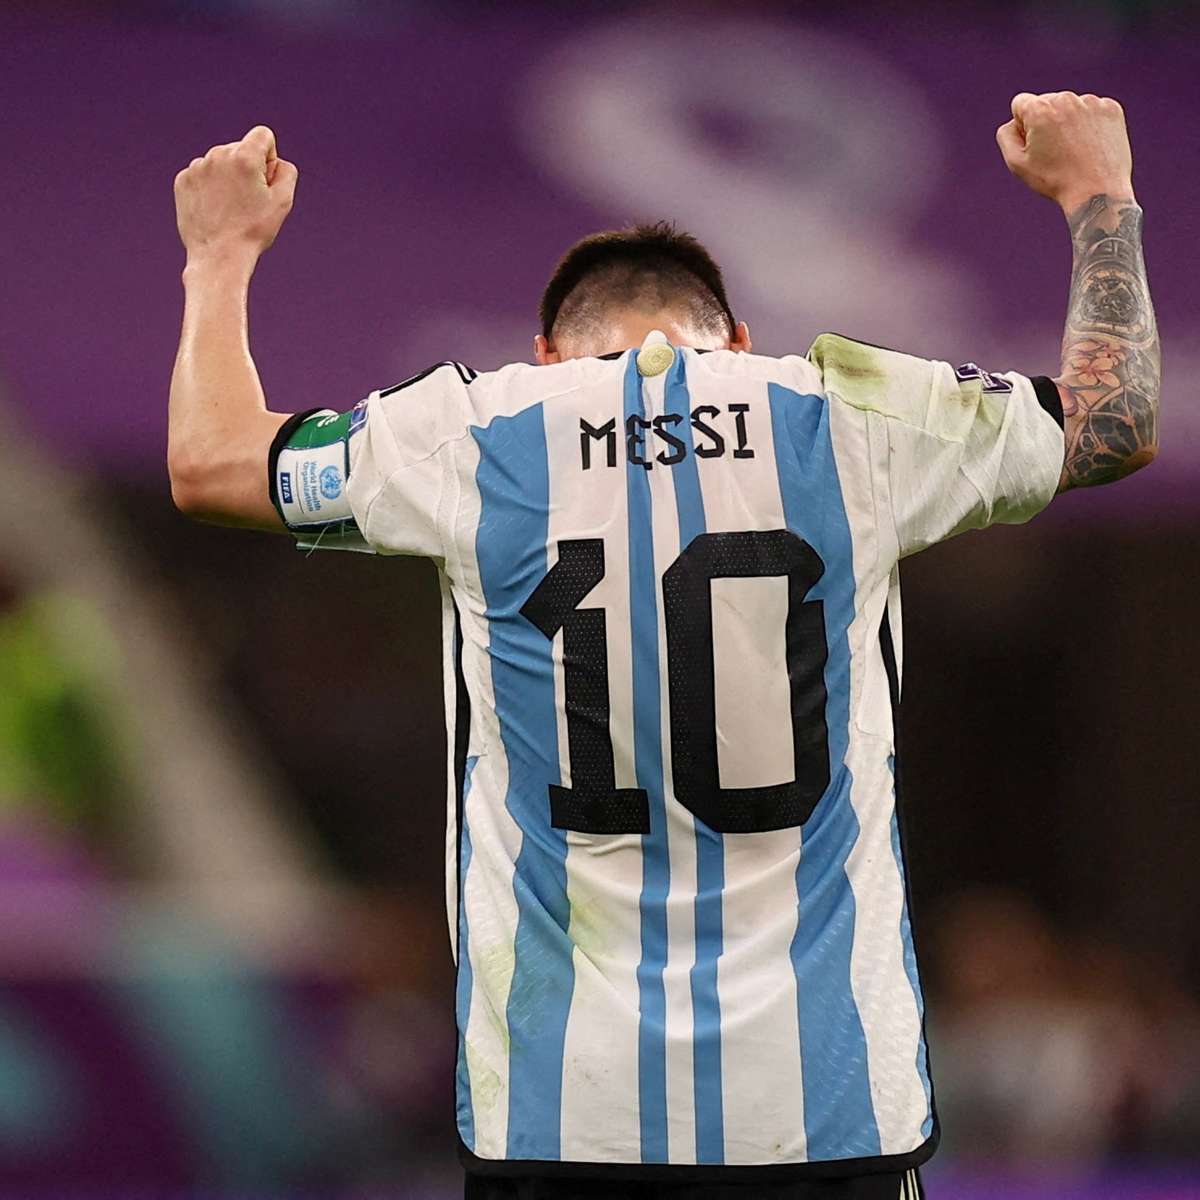 Messi sonha em dar título mundial à Argentina